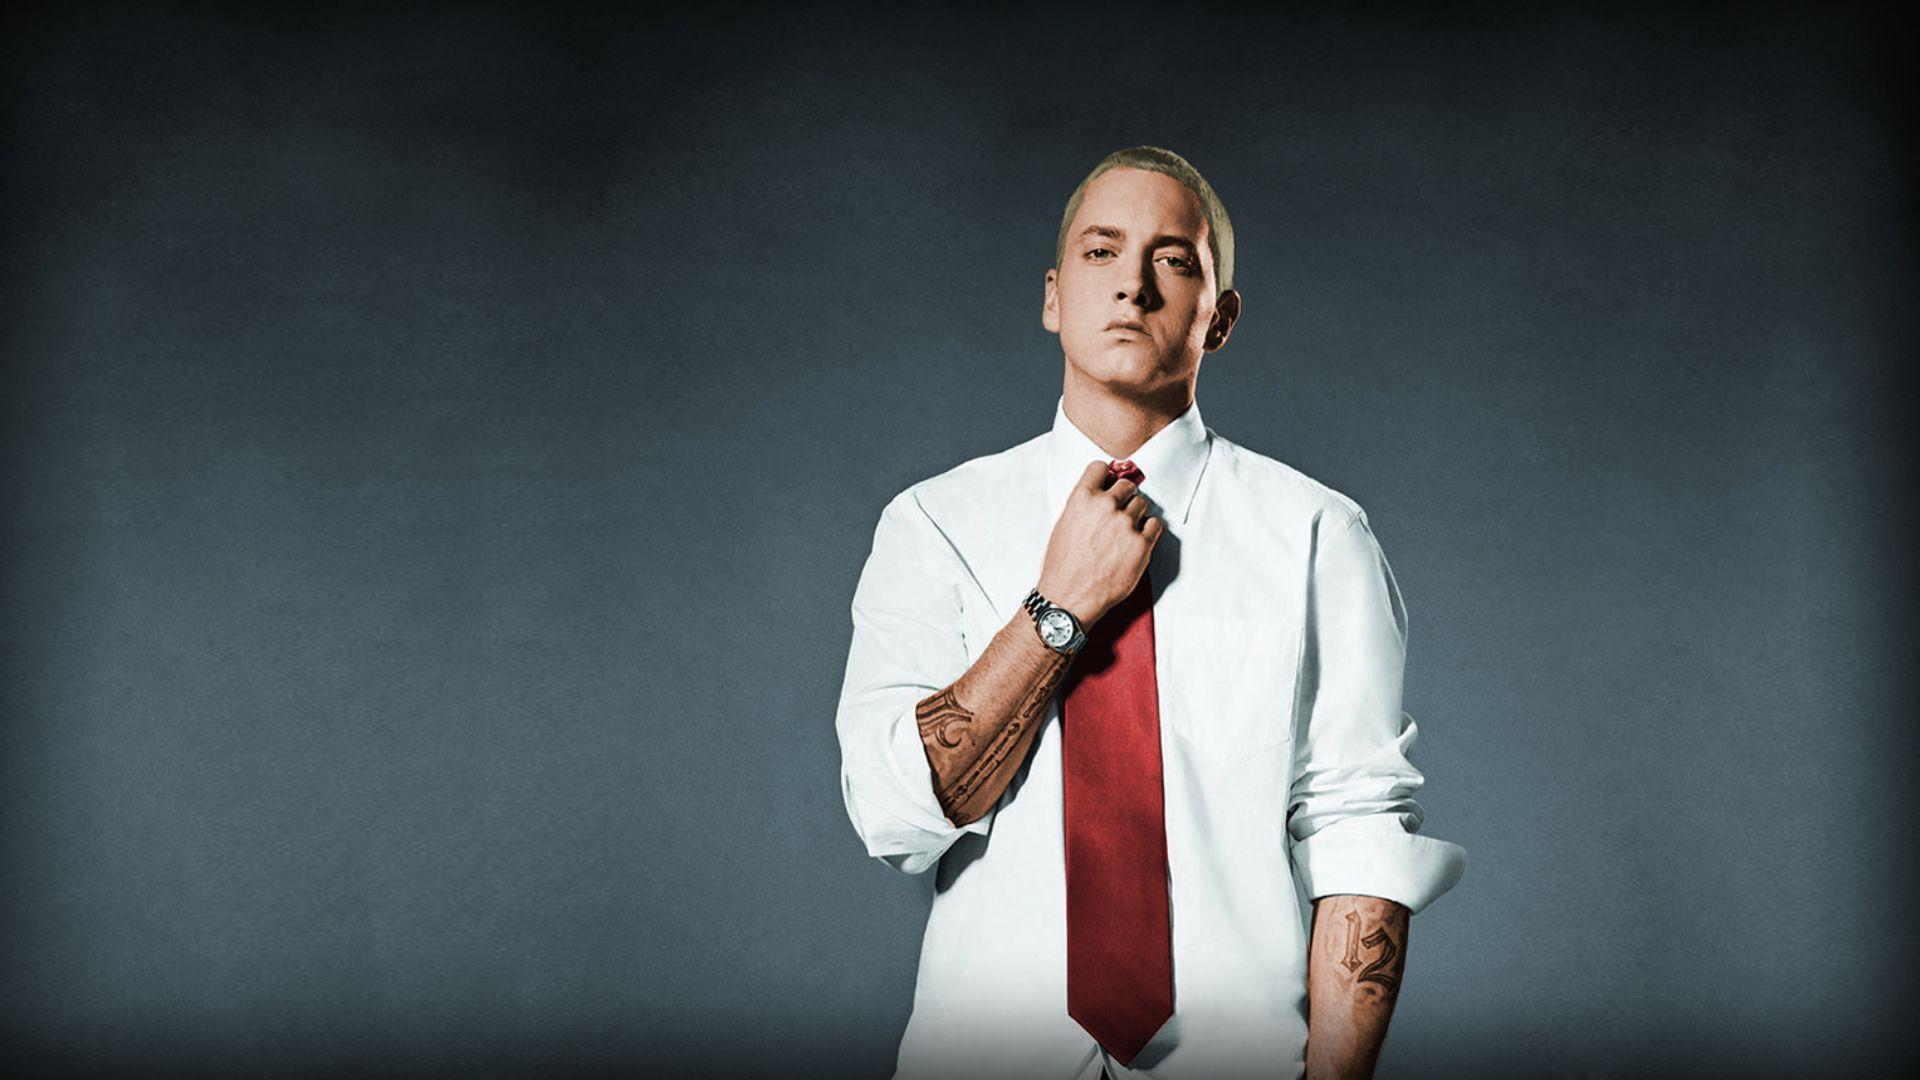 Eminem's Turn in A Series of Inspiring Stories